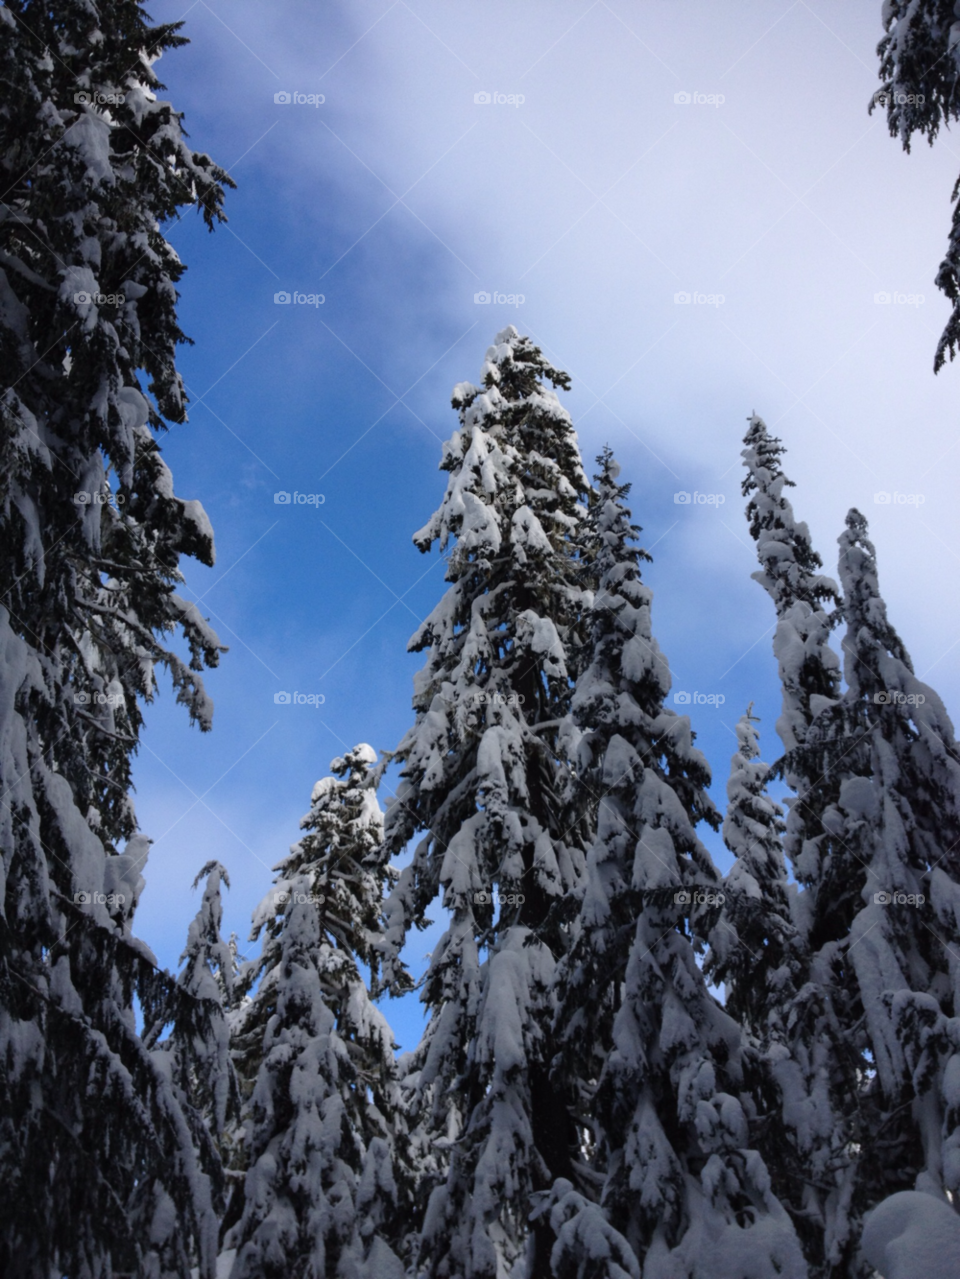 mt hood oregon snow winter trees by thecushman